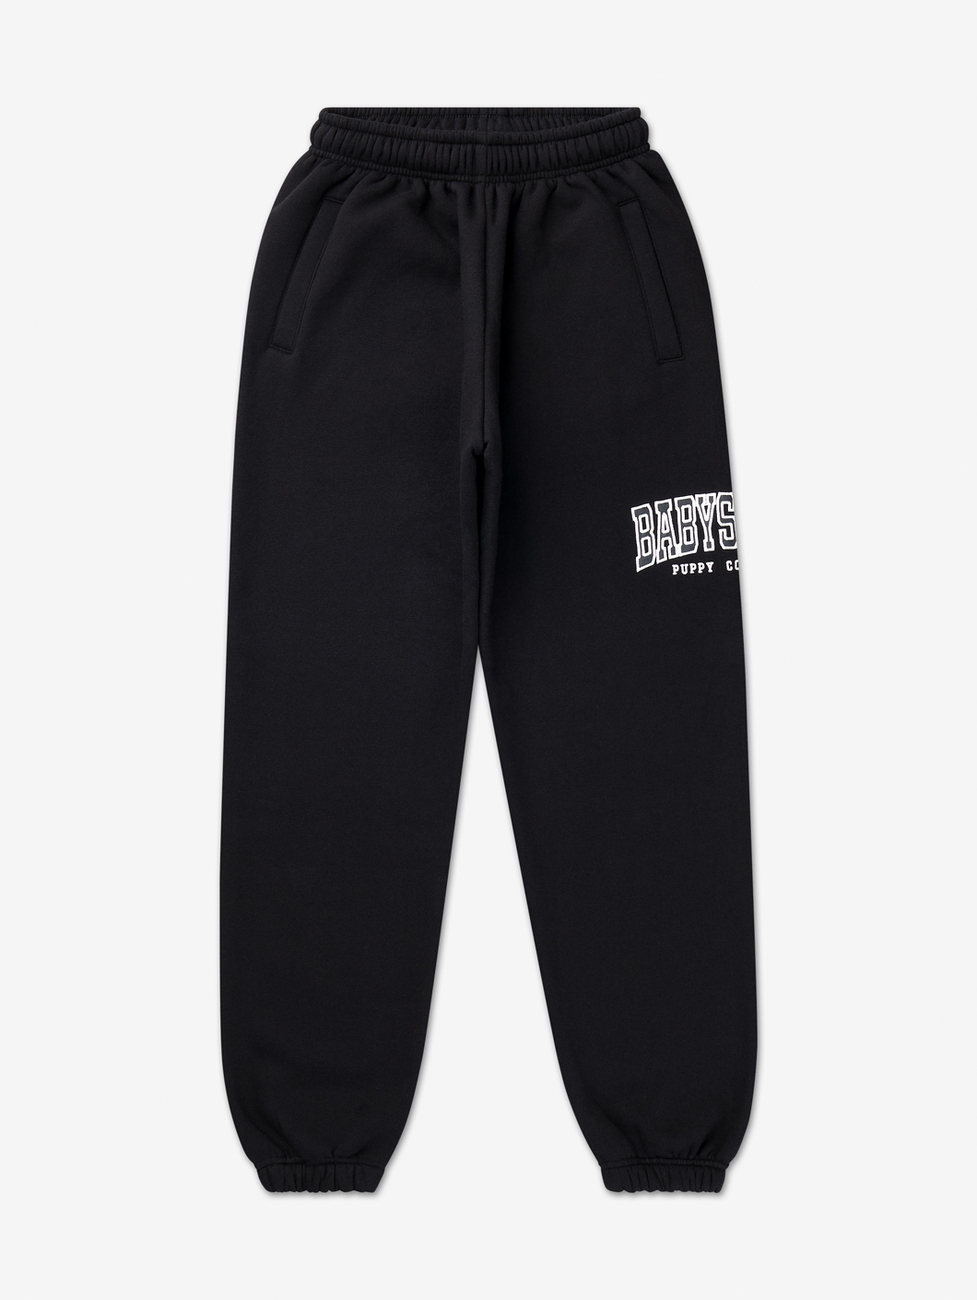 Babystaff College Sweatpants - schwarz L